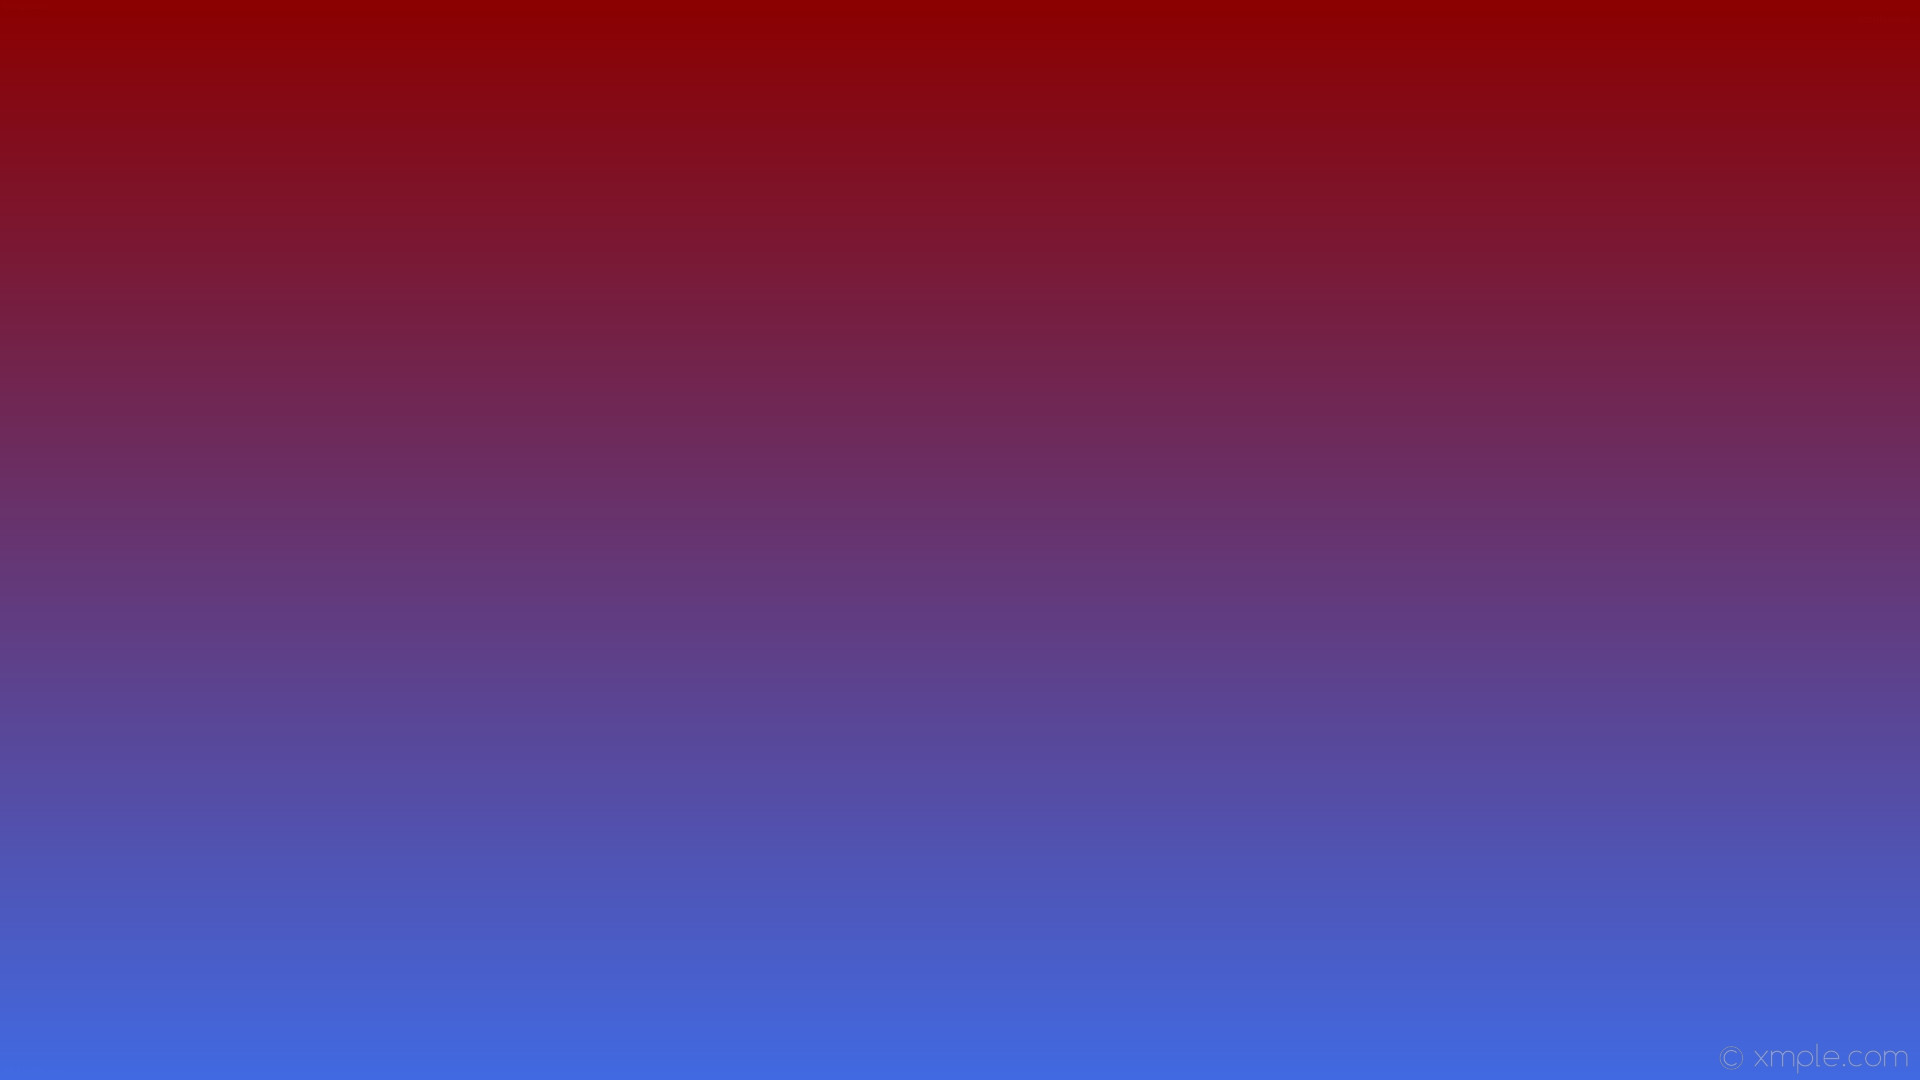 1920x1080 wallpaper gradient linear red blue dark red royal blue #8b0000 #4169e1 90Â°